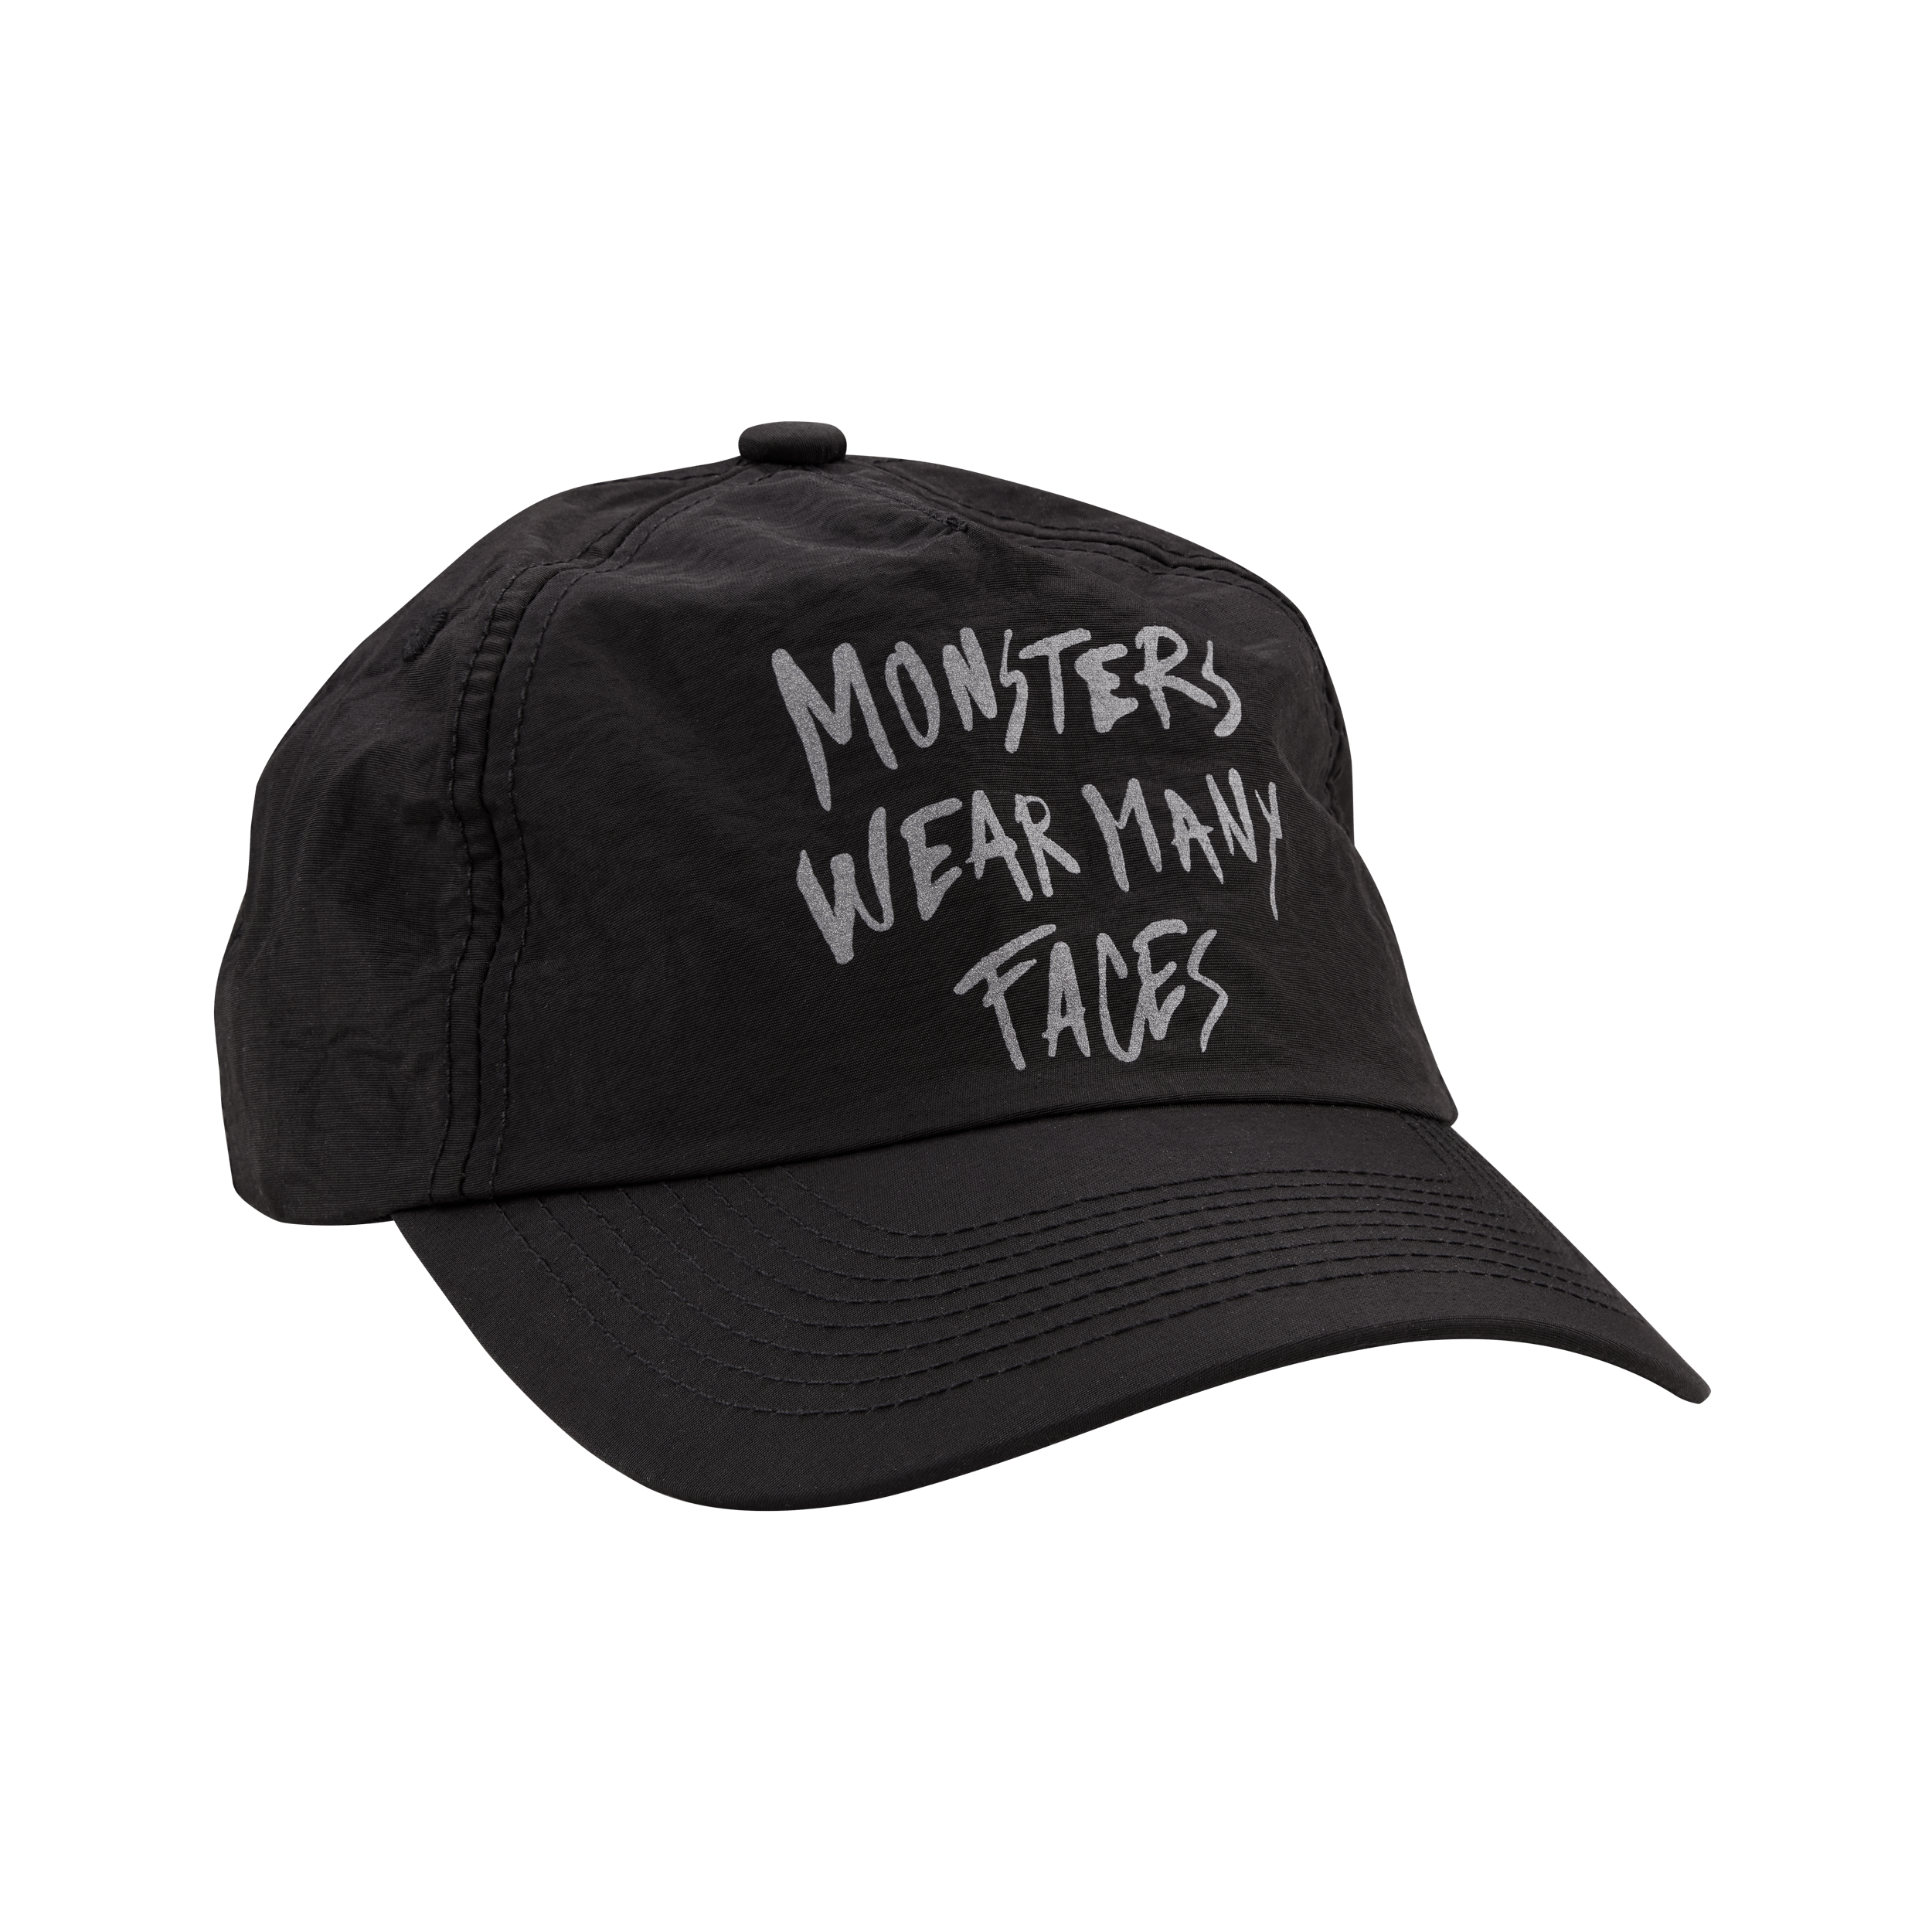 Monsters Cap